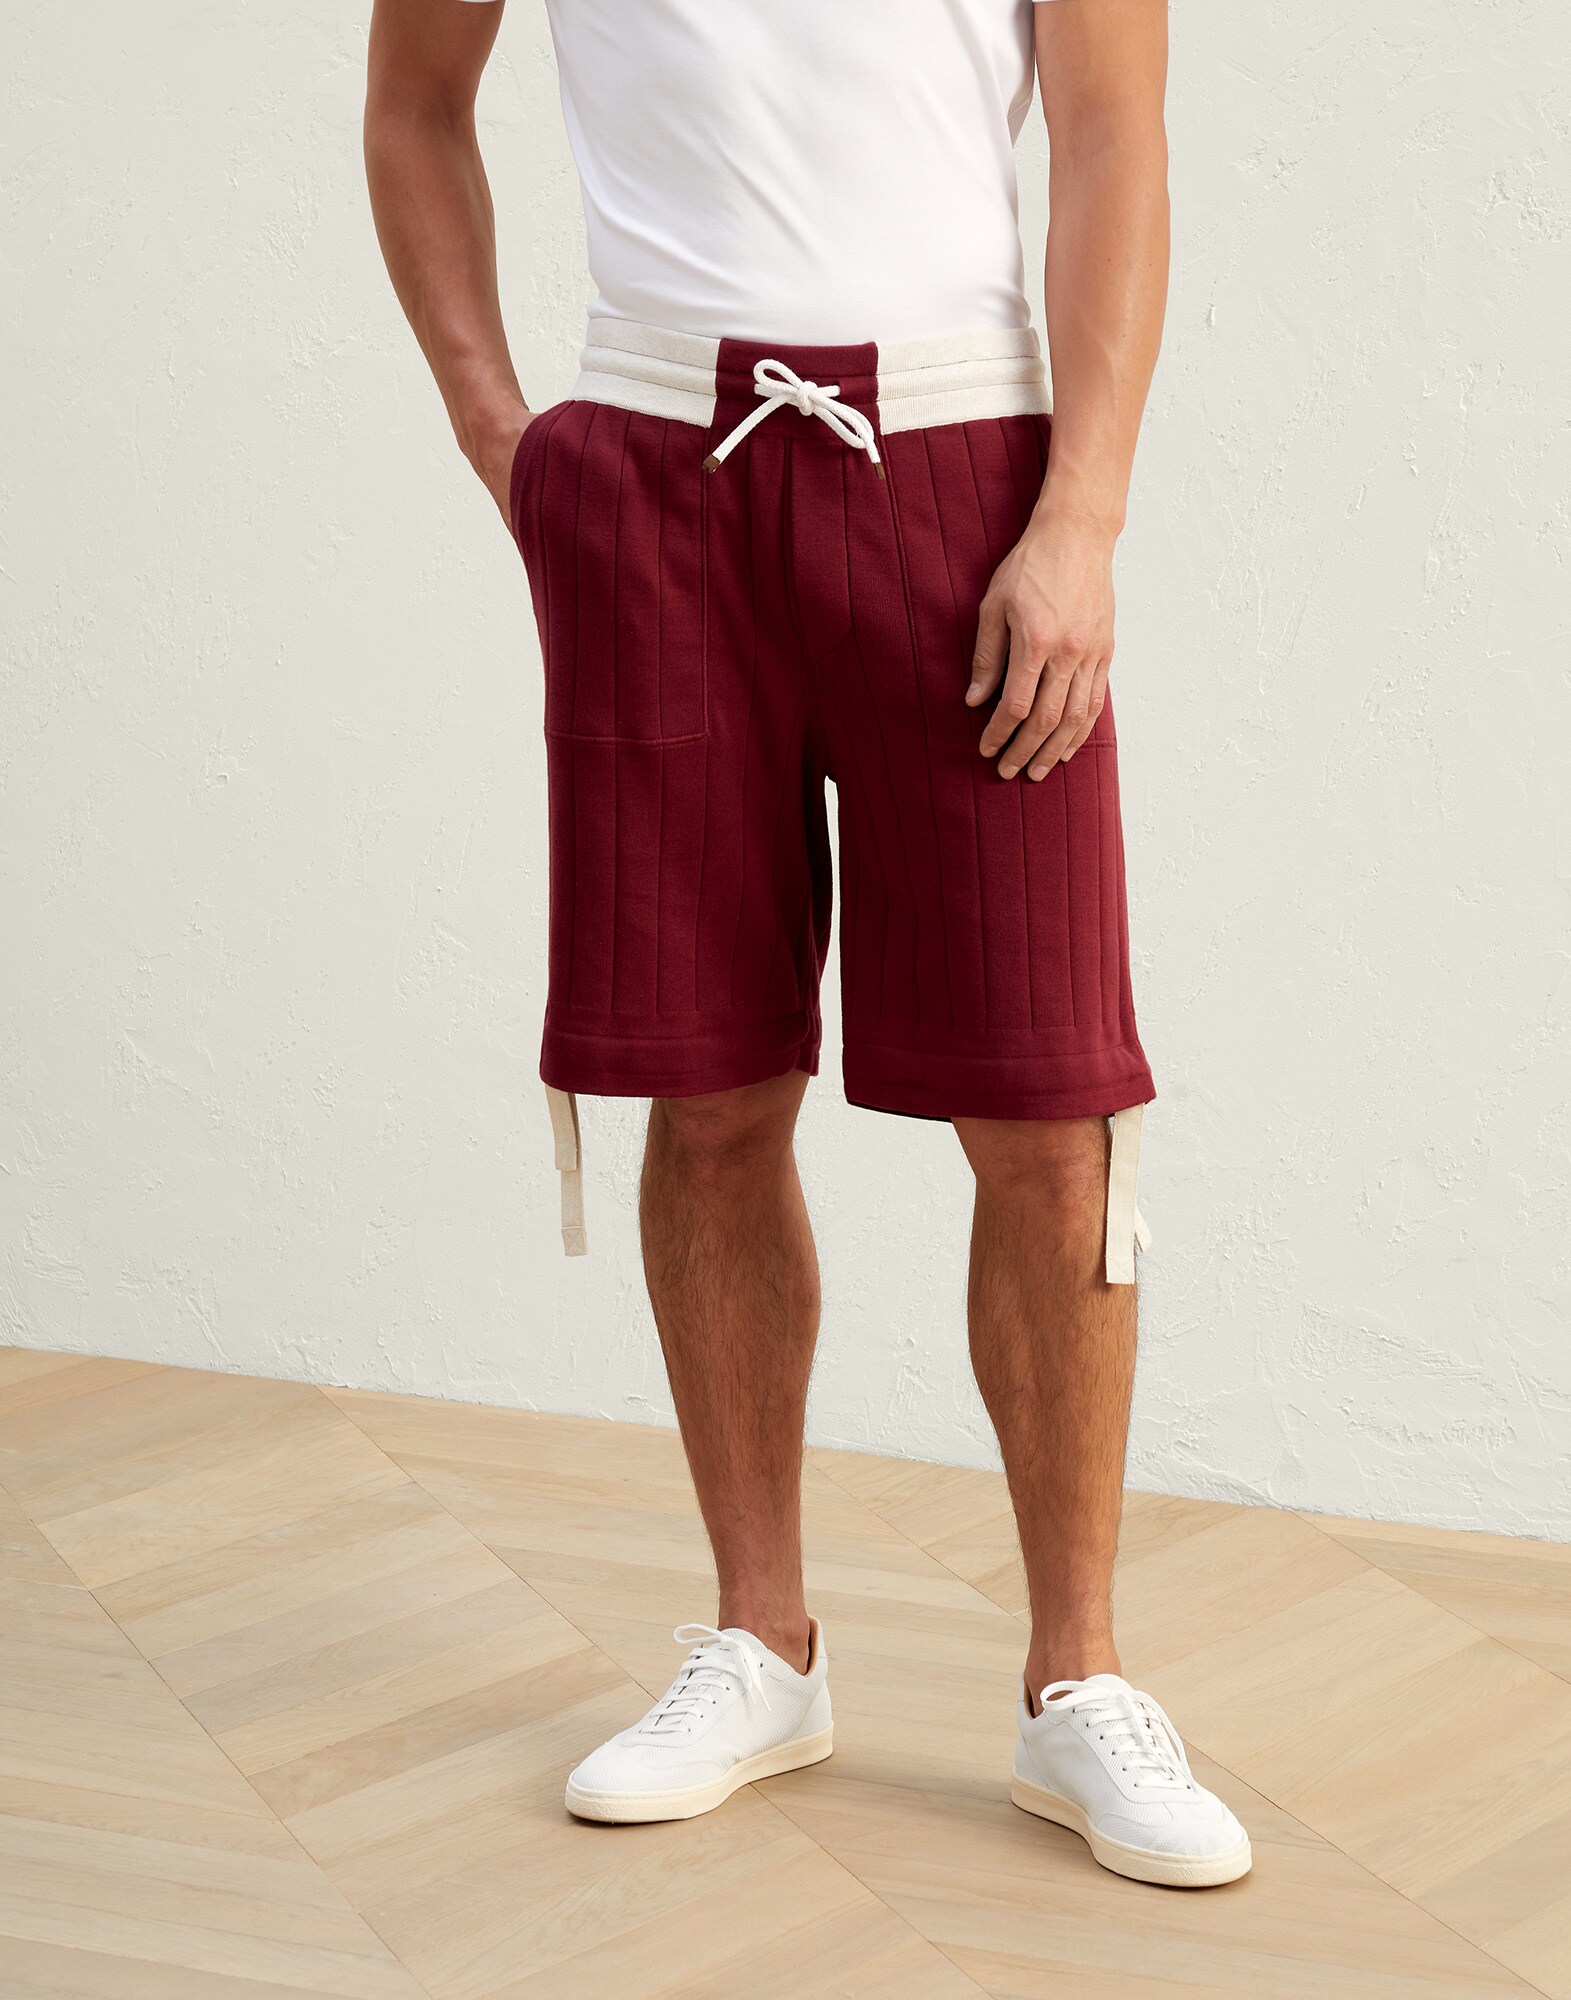 Knitted Bermuda shorts